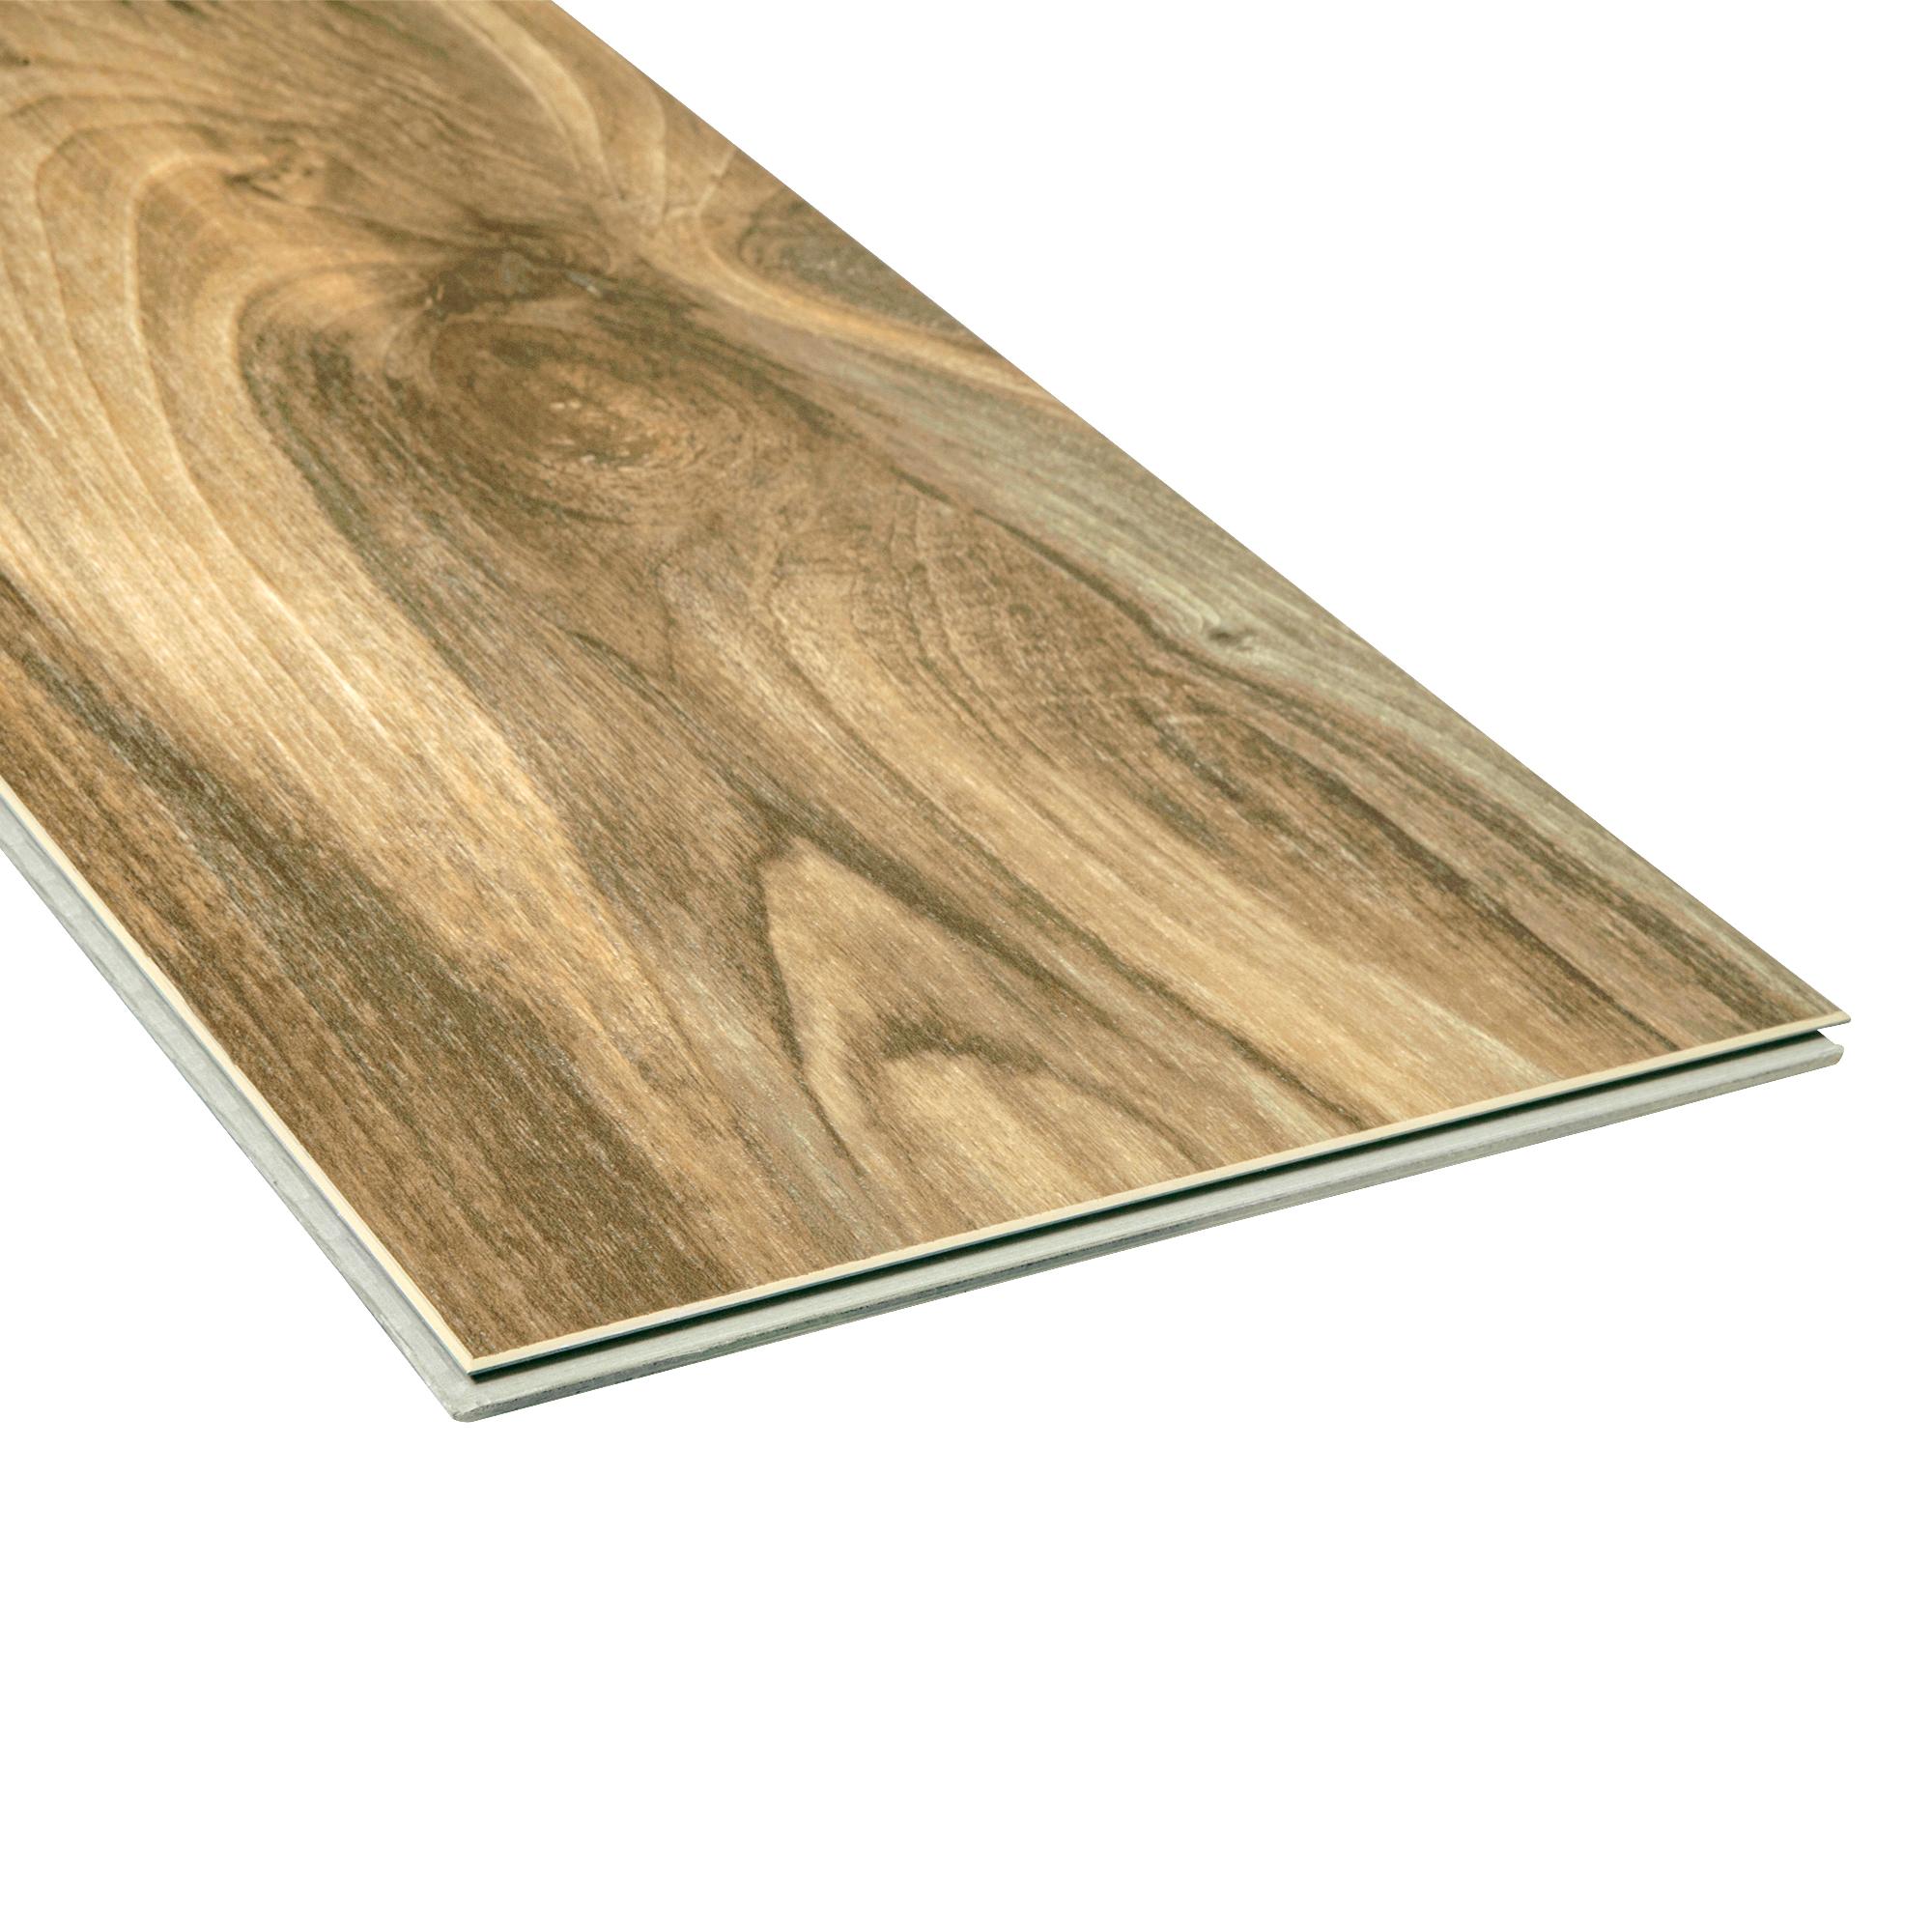 Mohawk Grandwood Vinyl Planks - Solidtech Pet Proof Floors